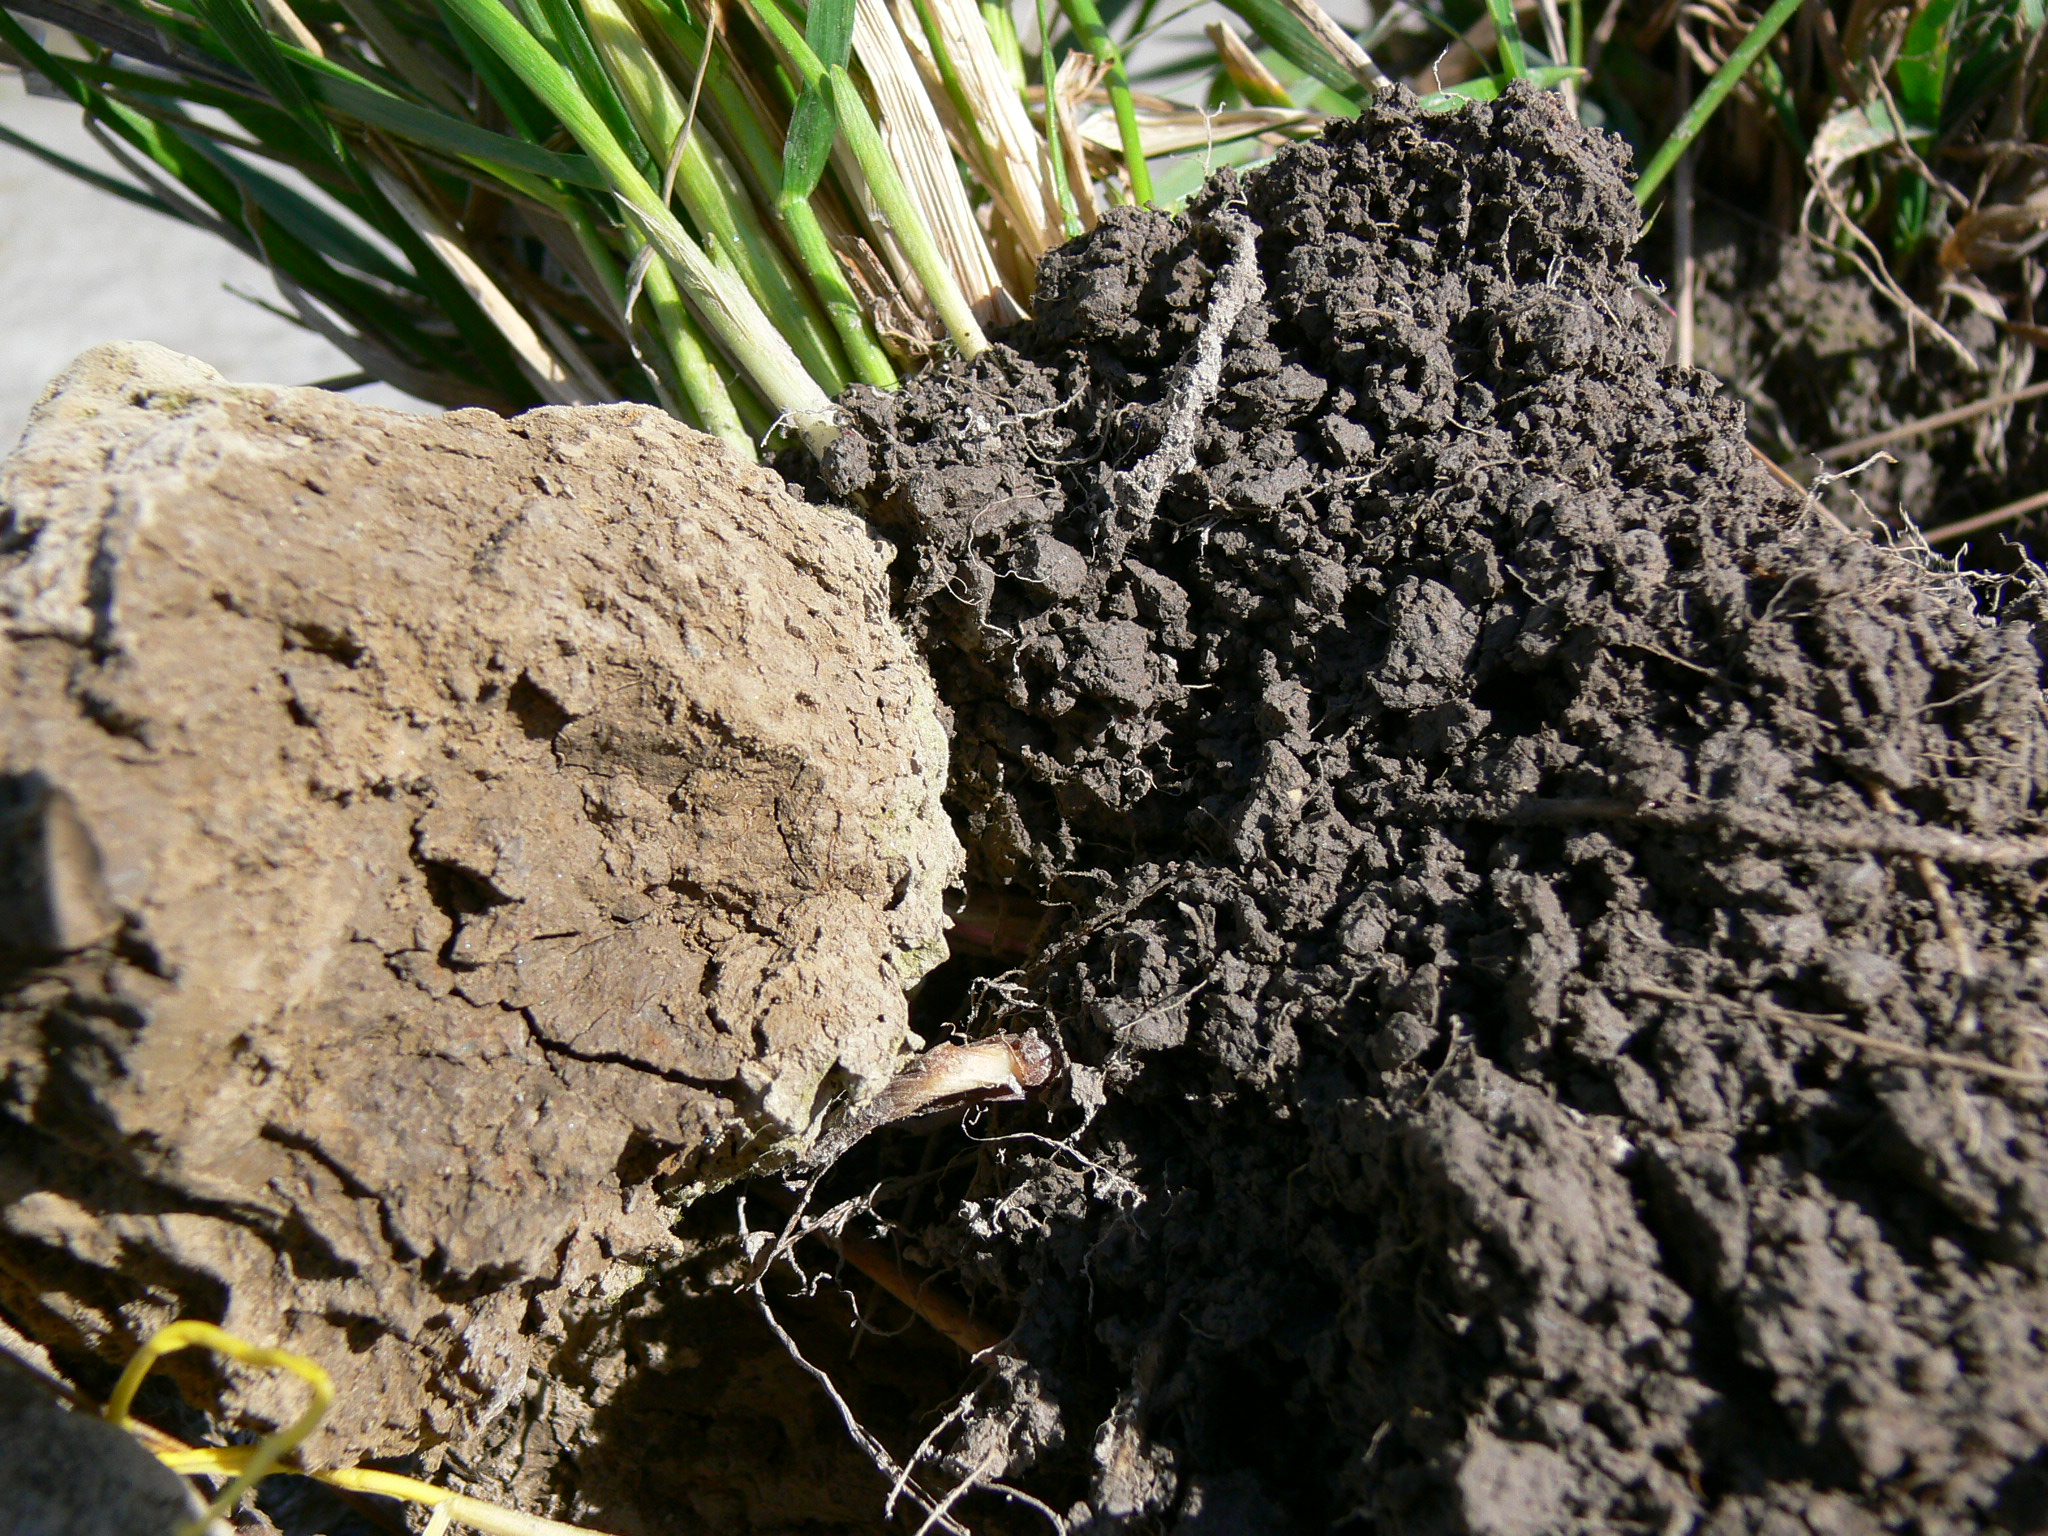 Soil of a potato field (left) versus a grassland set-aside (right)